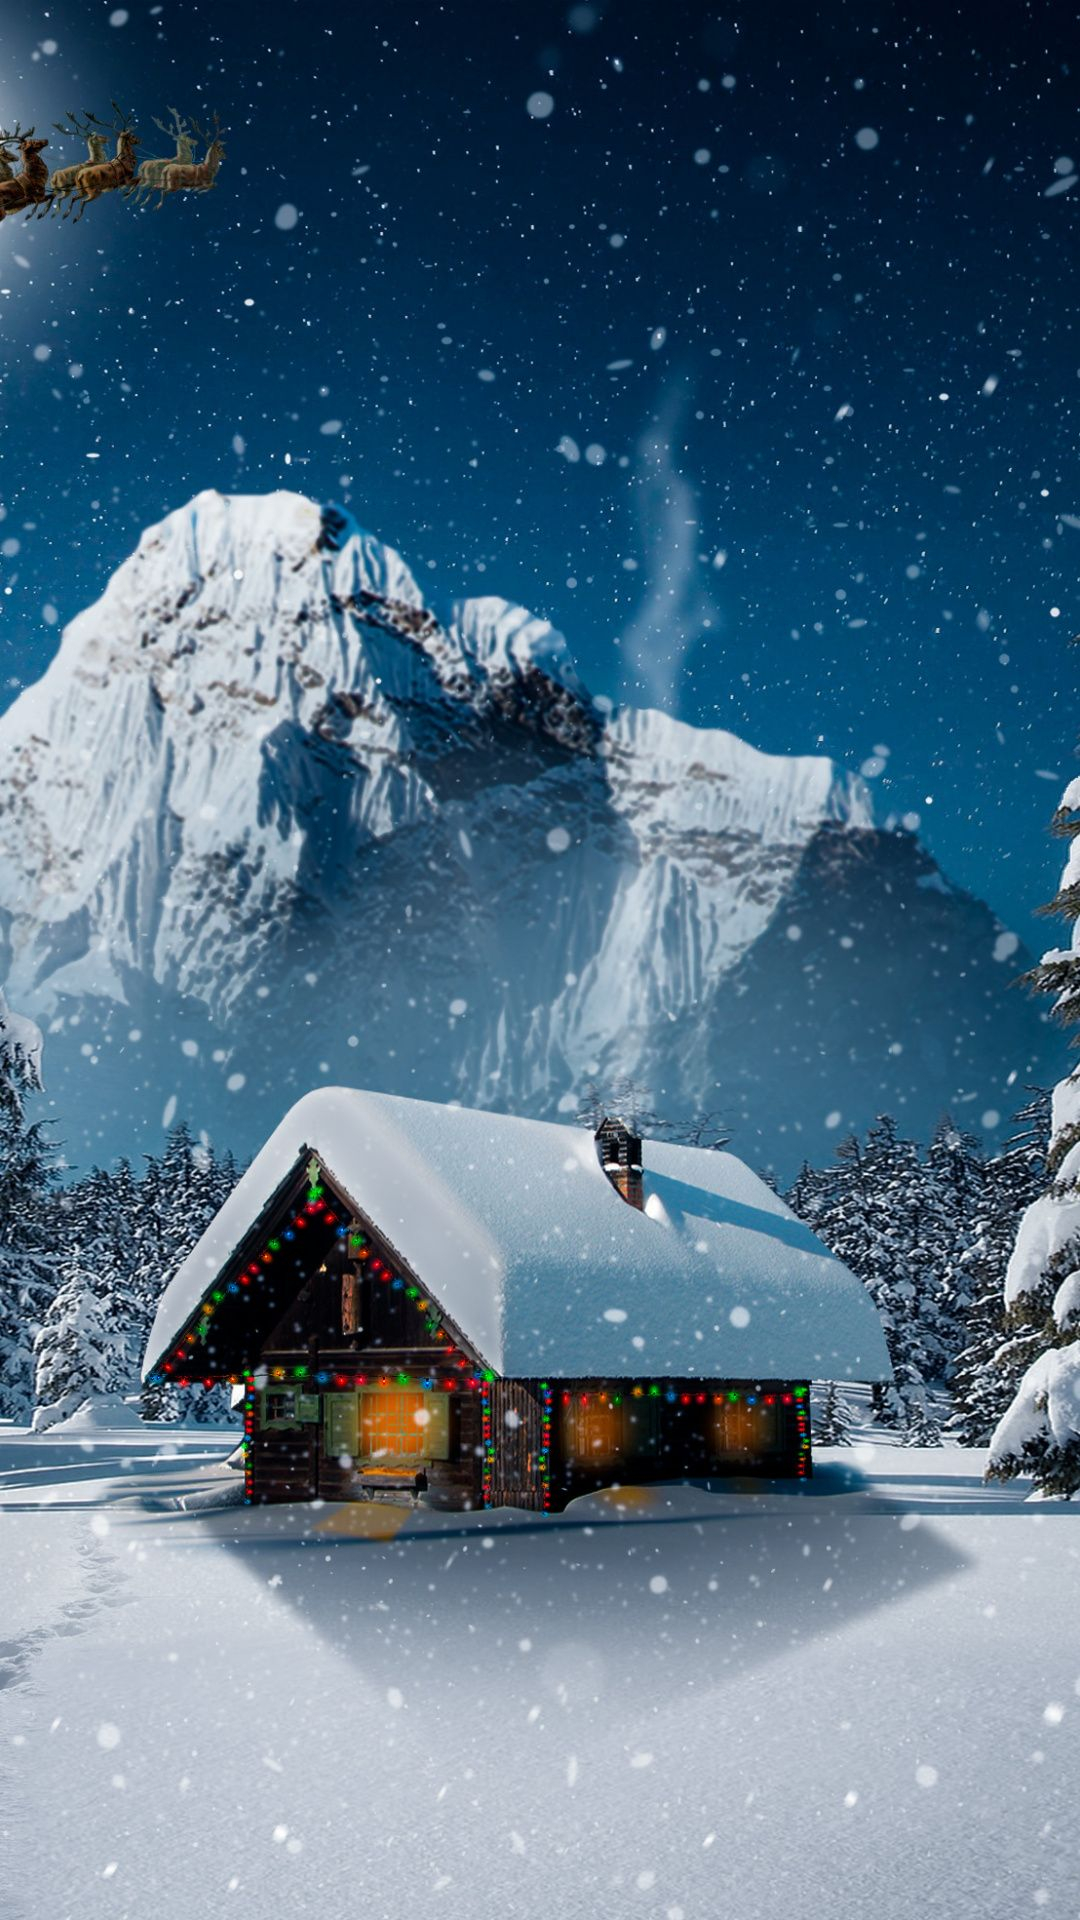 1080x1920 Snowfall, winter, hut, house, winter, Christmas, wallpaper | Wallpaper, Beautiful landscapes, Christmas wallpaper